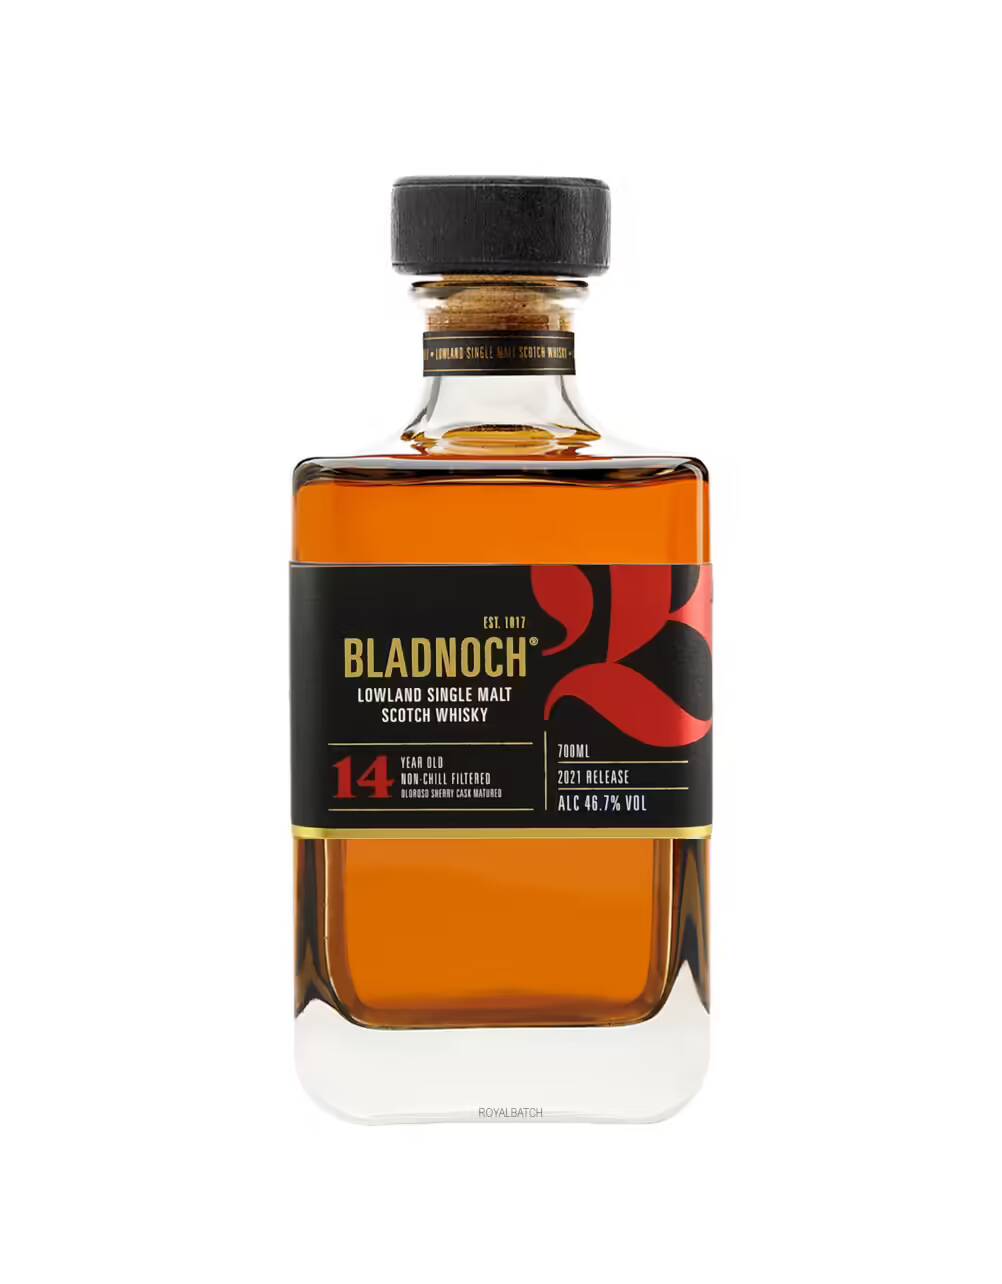 Bladnoch 14 Year Old Lowland Single Malt Scotch Whisky